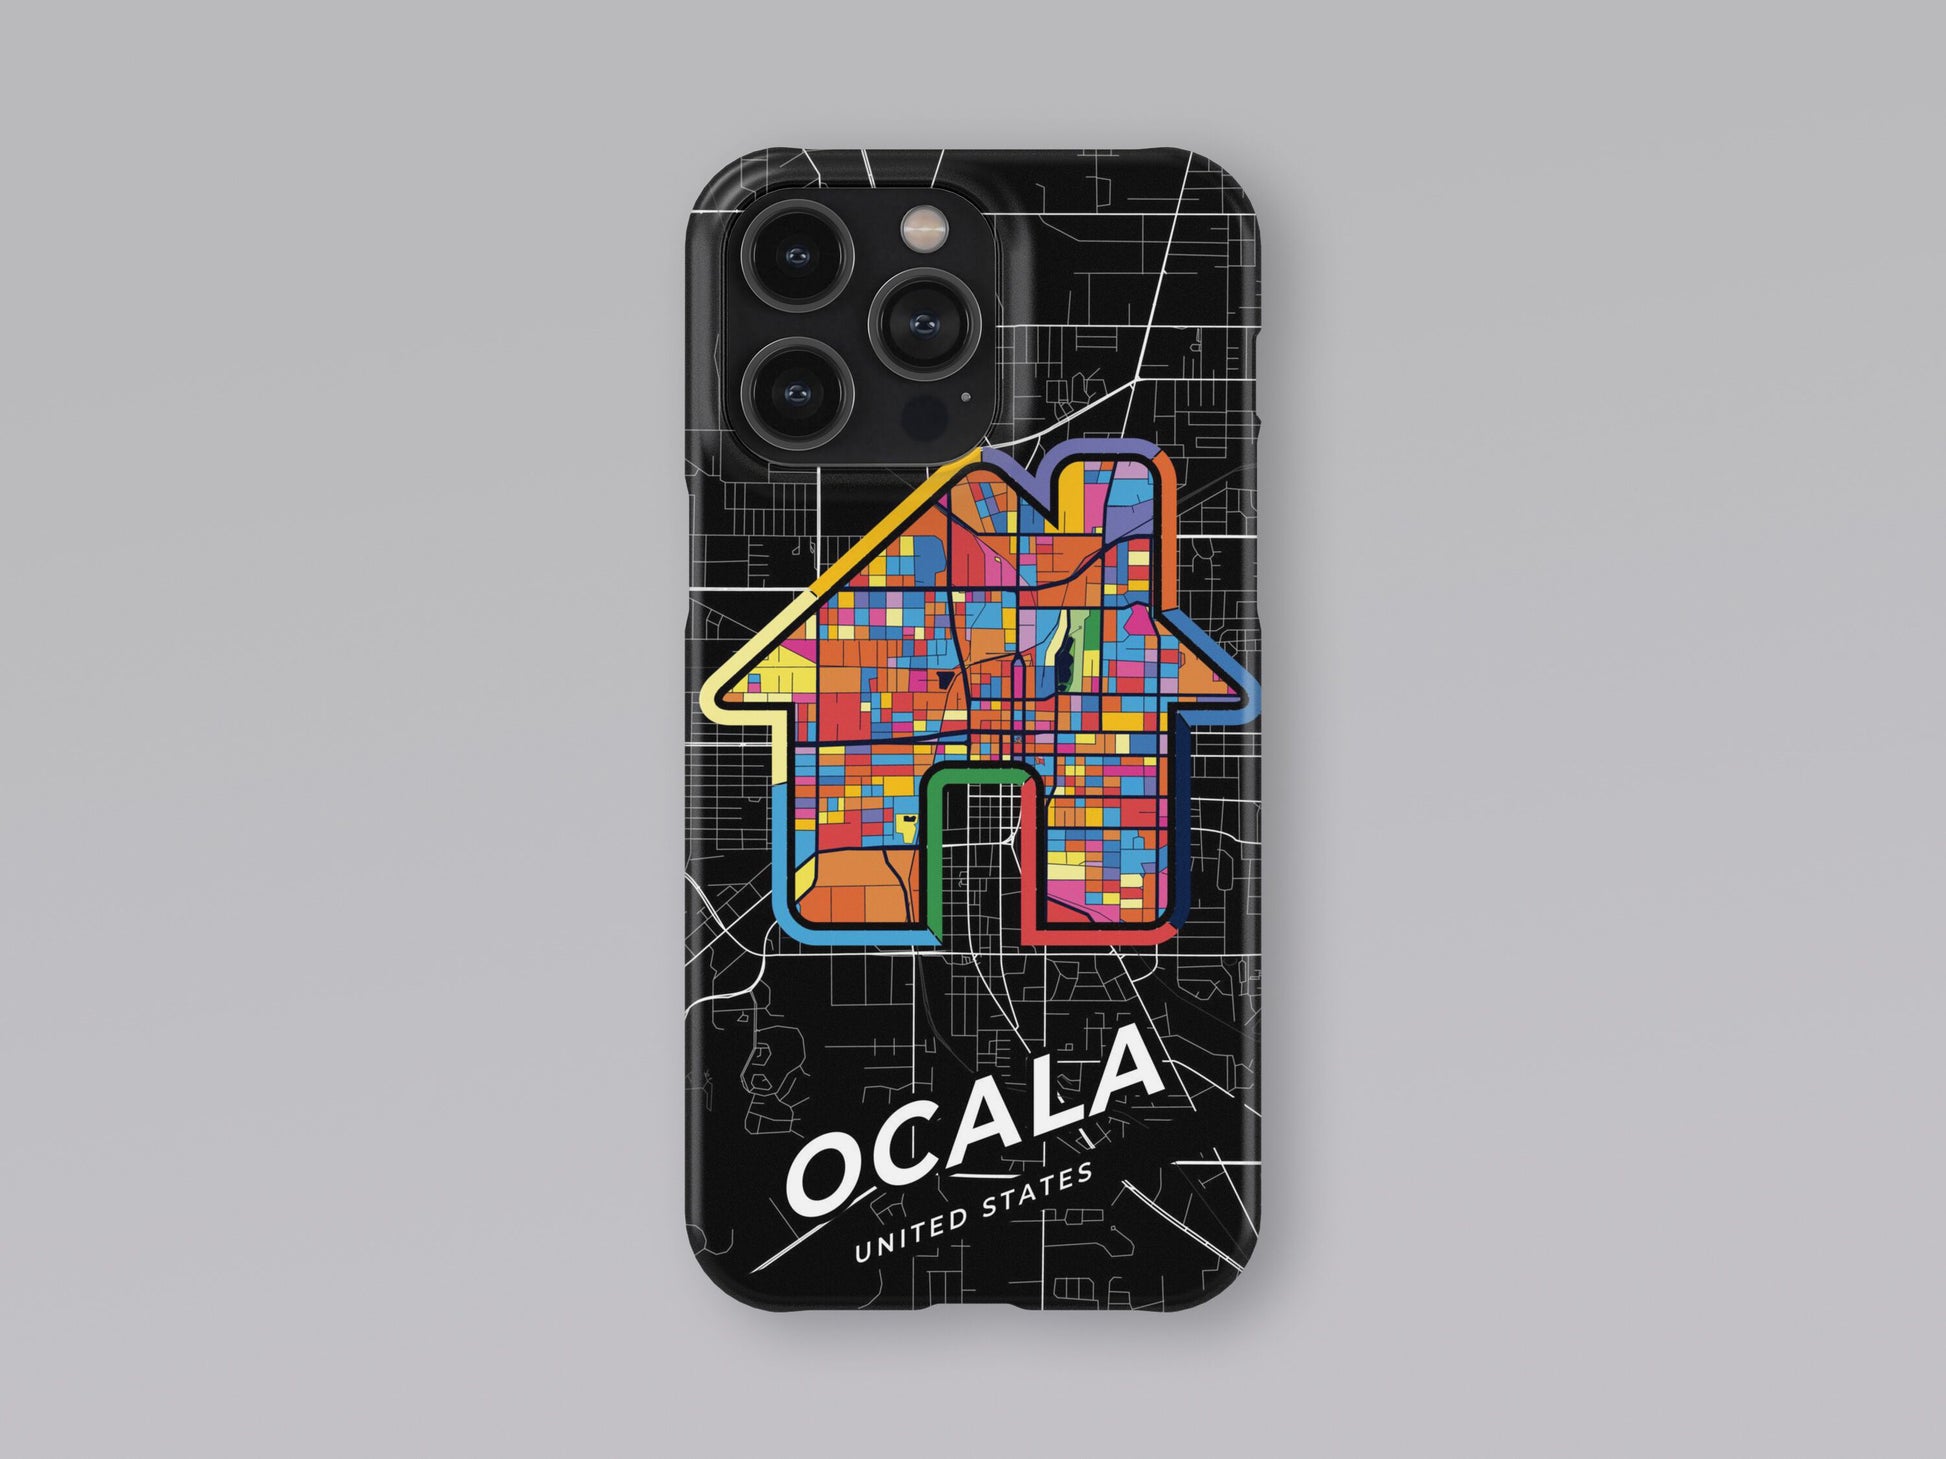 Ocala Florida slim phone case with colorful icon 3